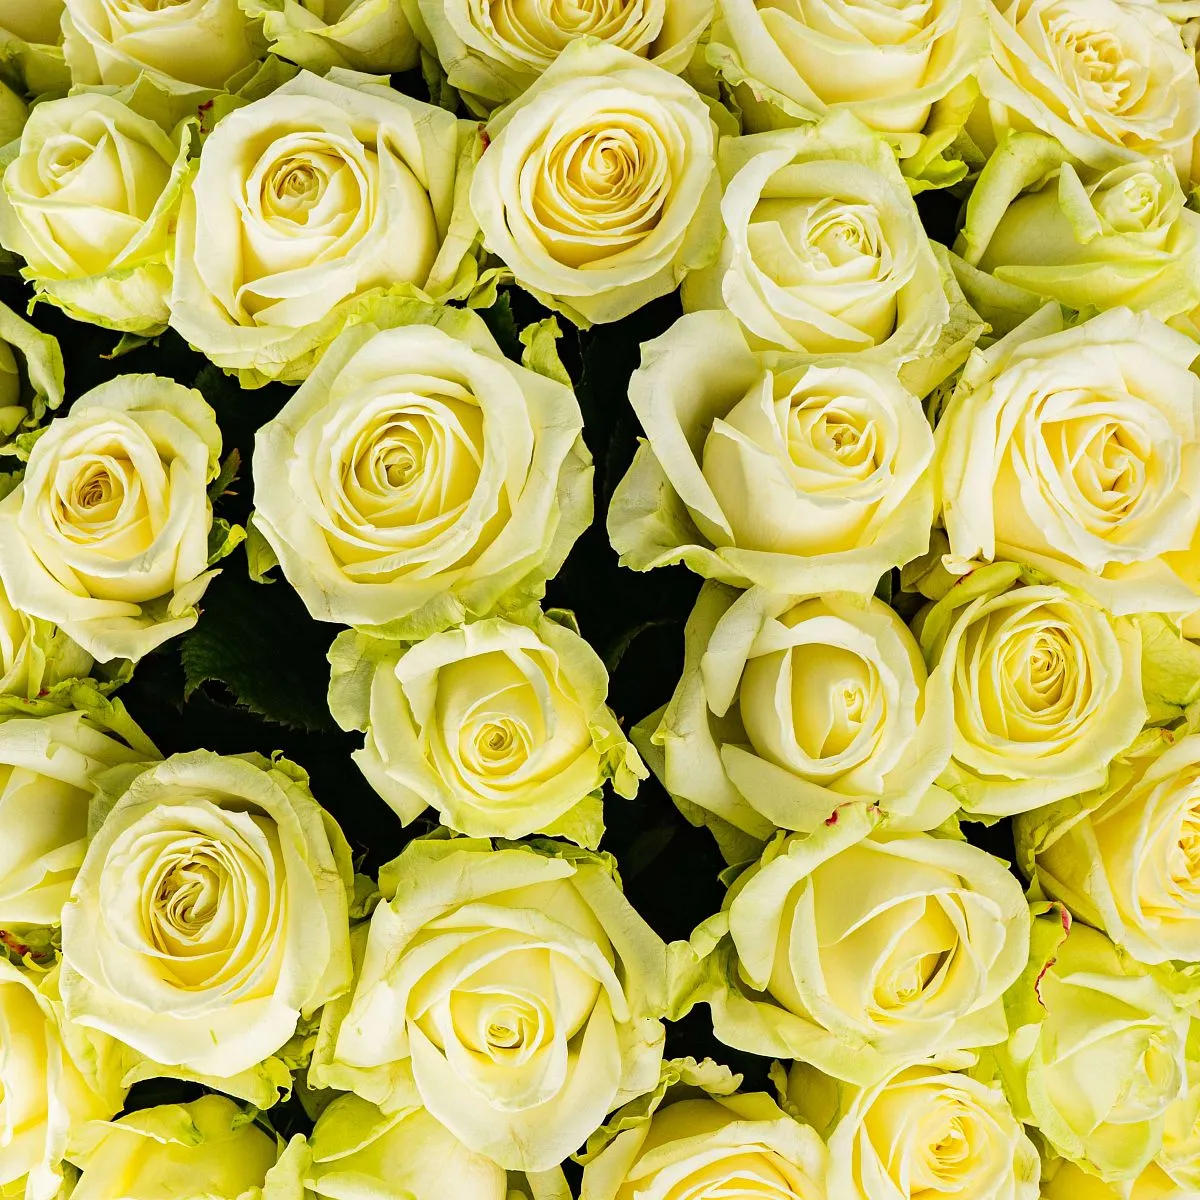 61 бело-зеленая роза (70 см)